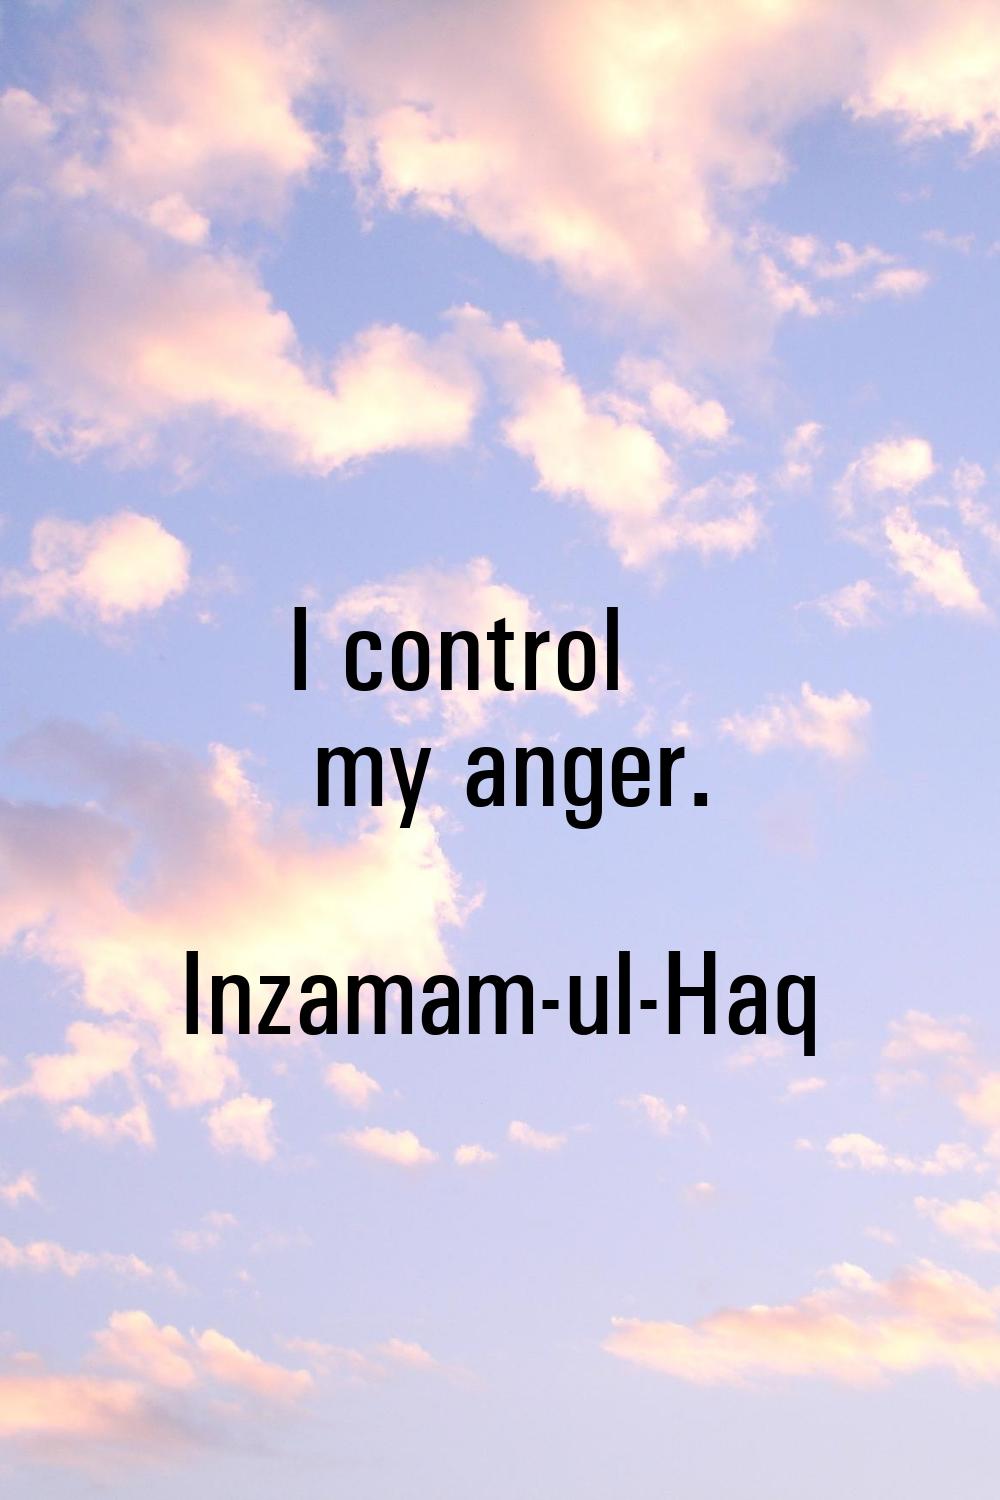 I control my anger.